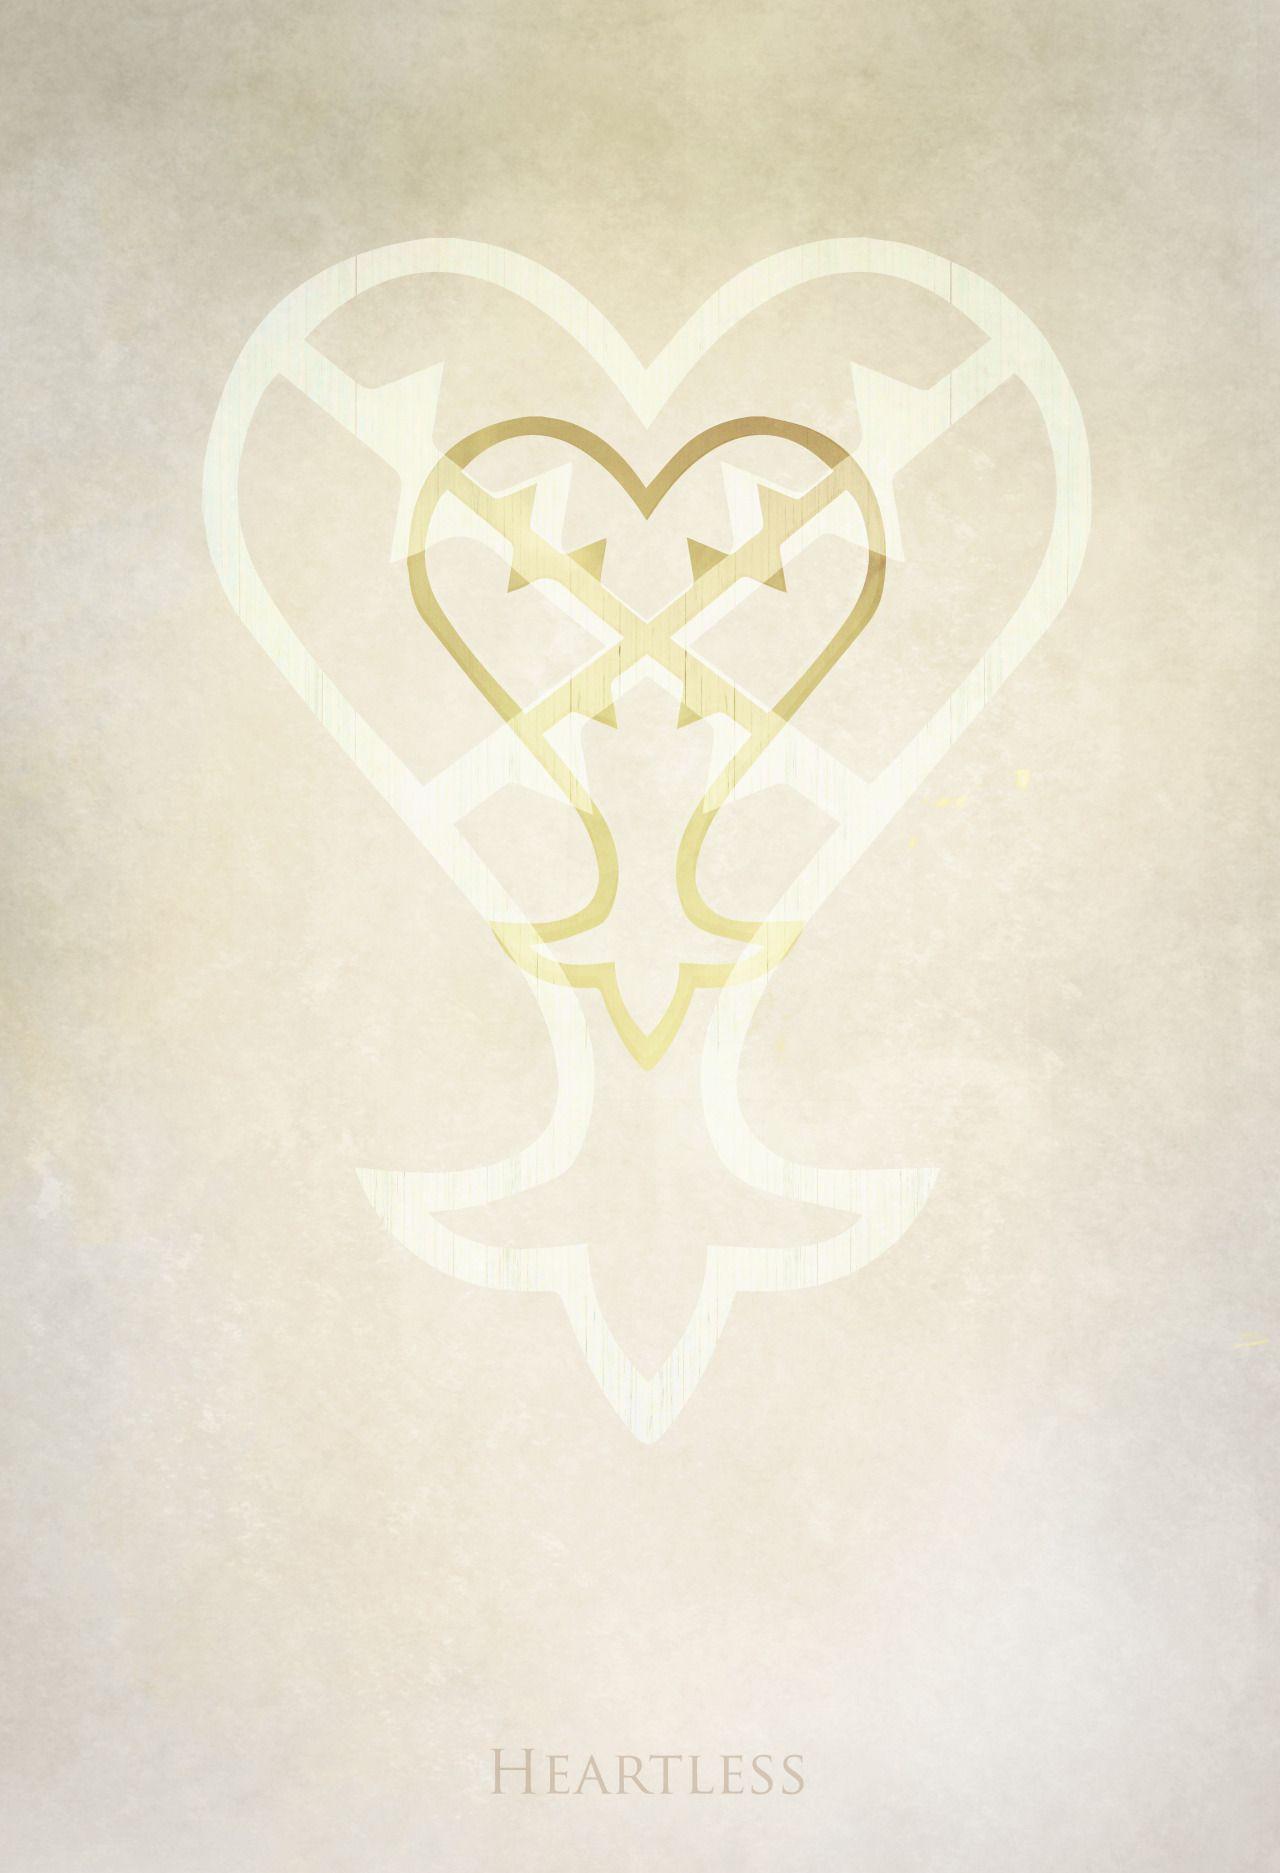 mcashe: “Kingdom hearts symbols =D Some of them xD Manipulation